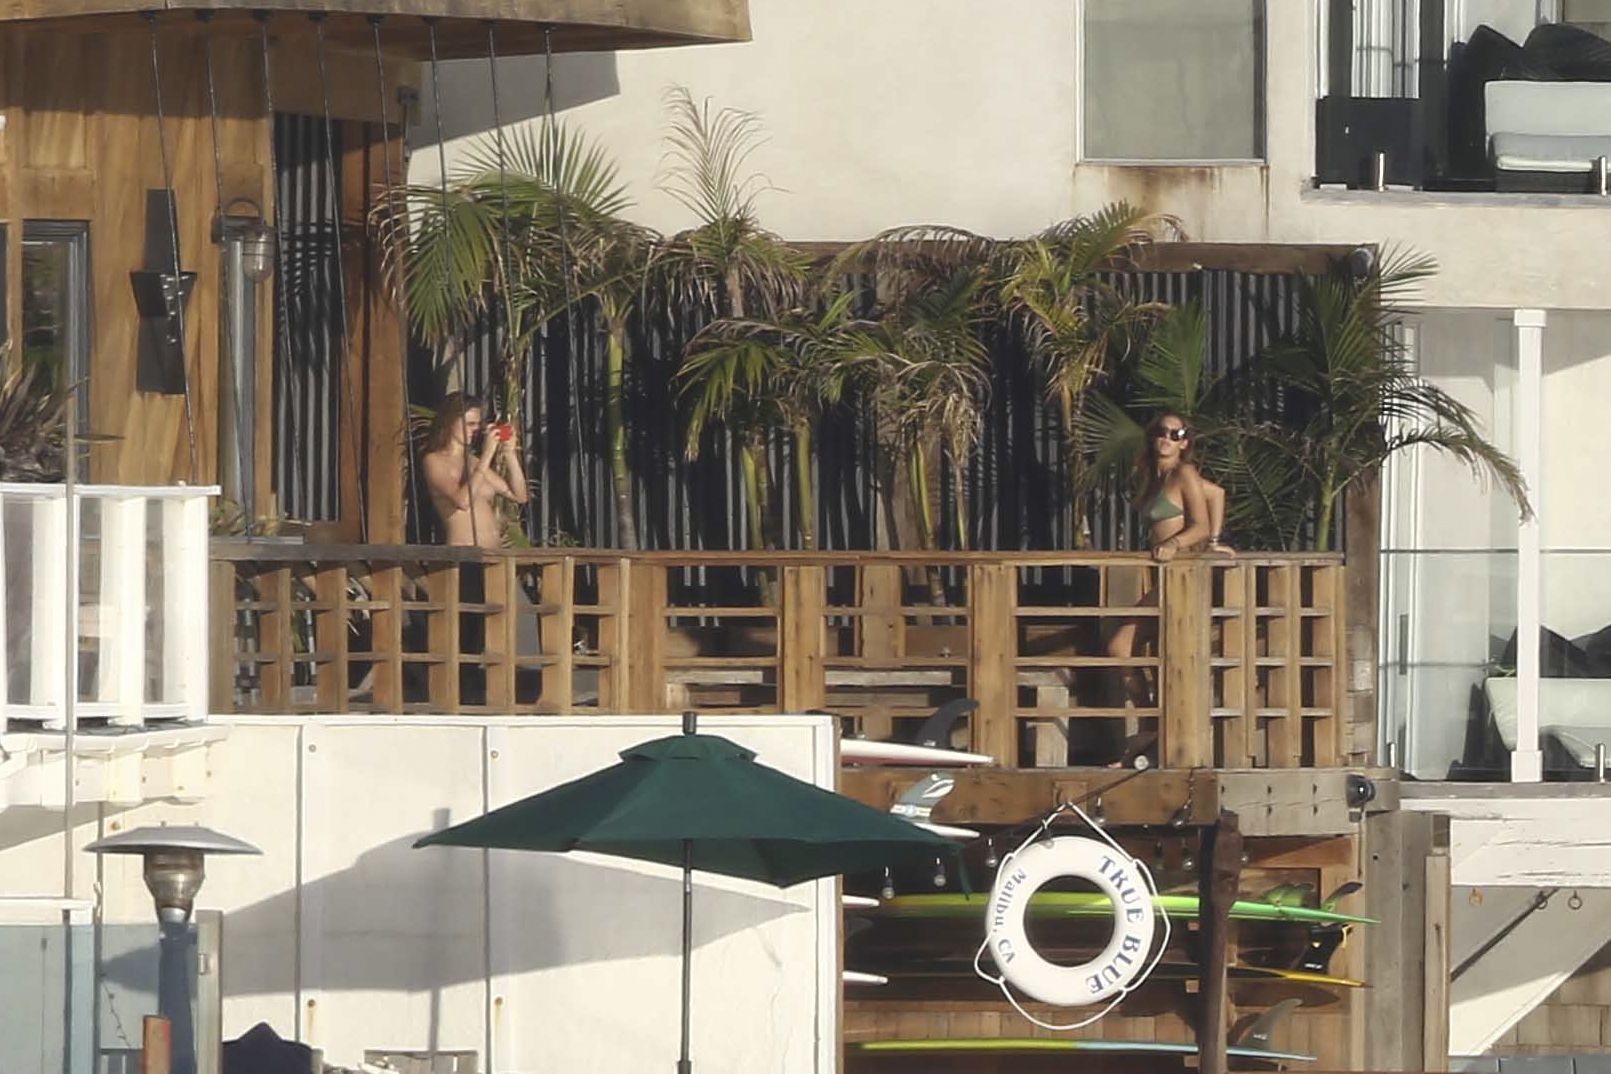 Cara_Delevingne_topless_on_a_balcony_in_Malibu_48x_HQ_29.jpg